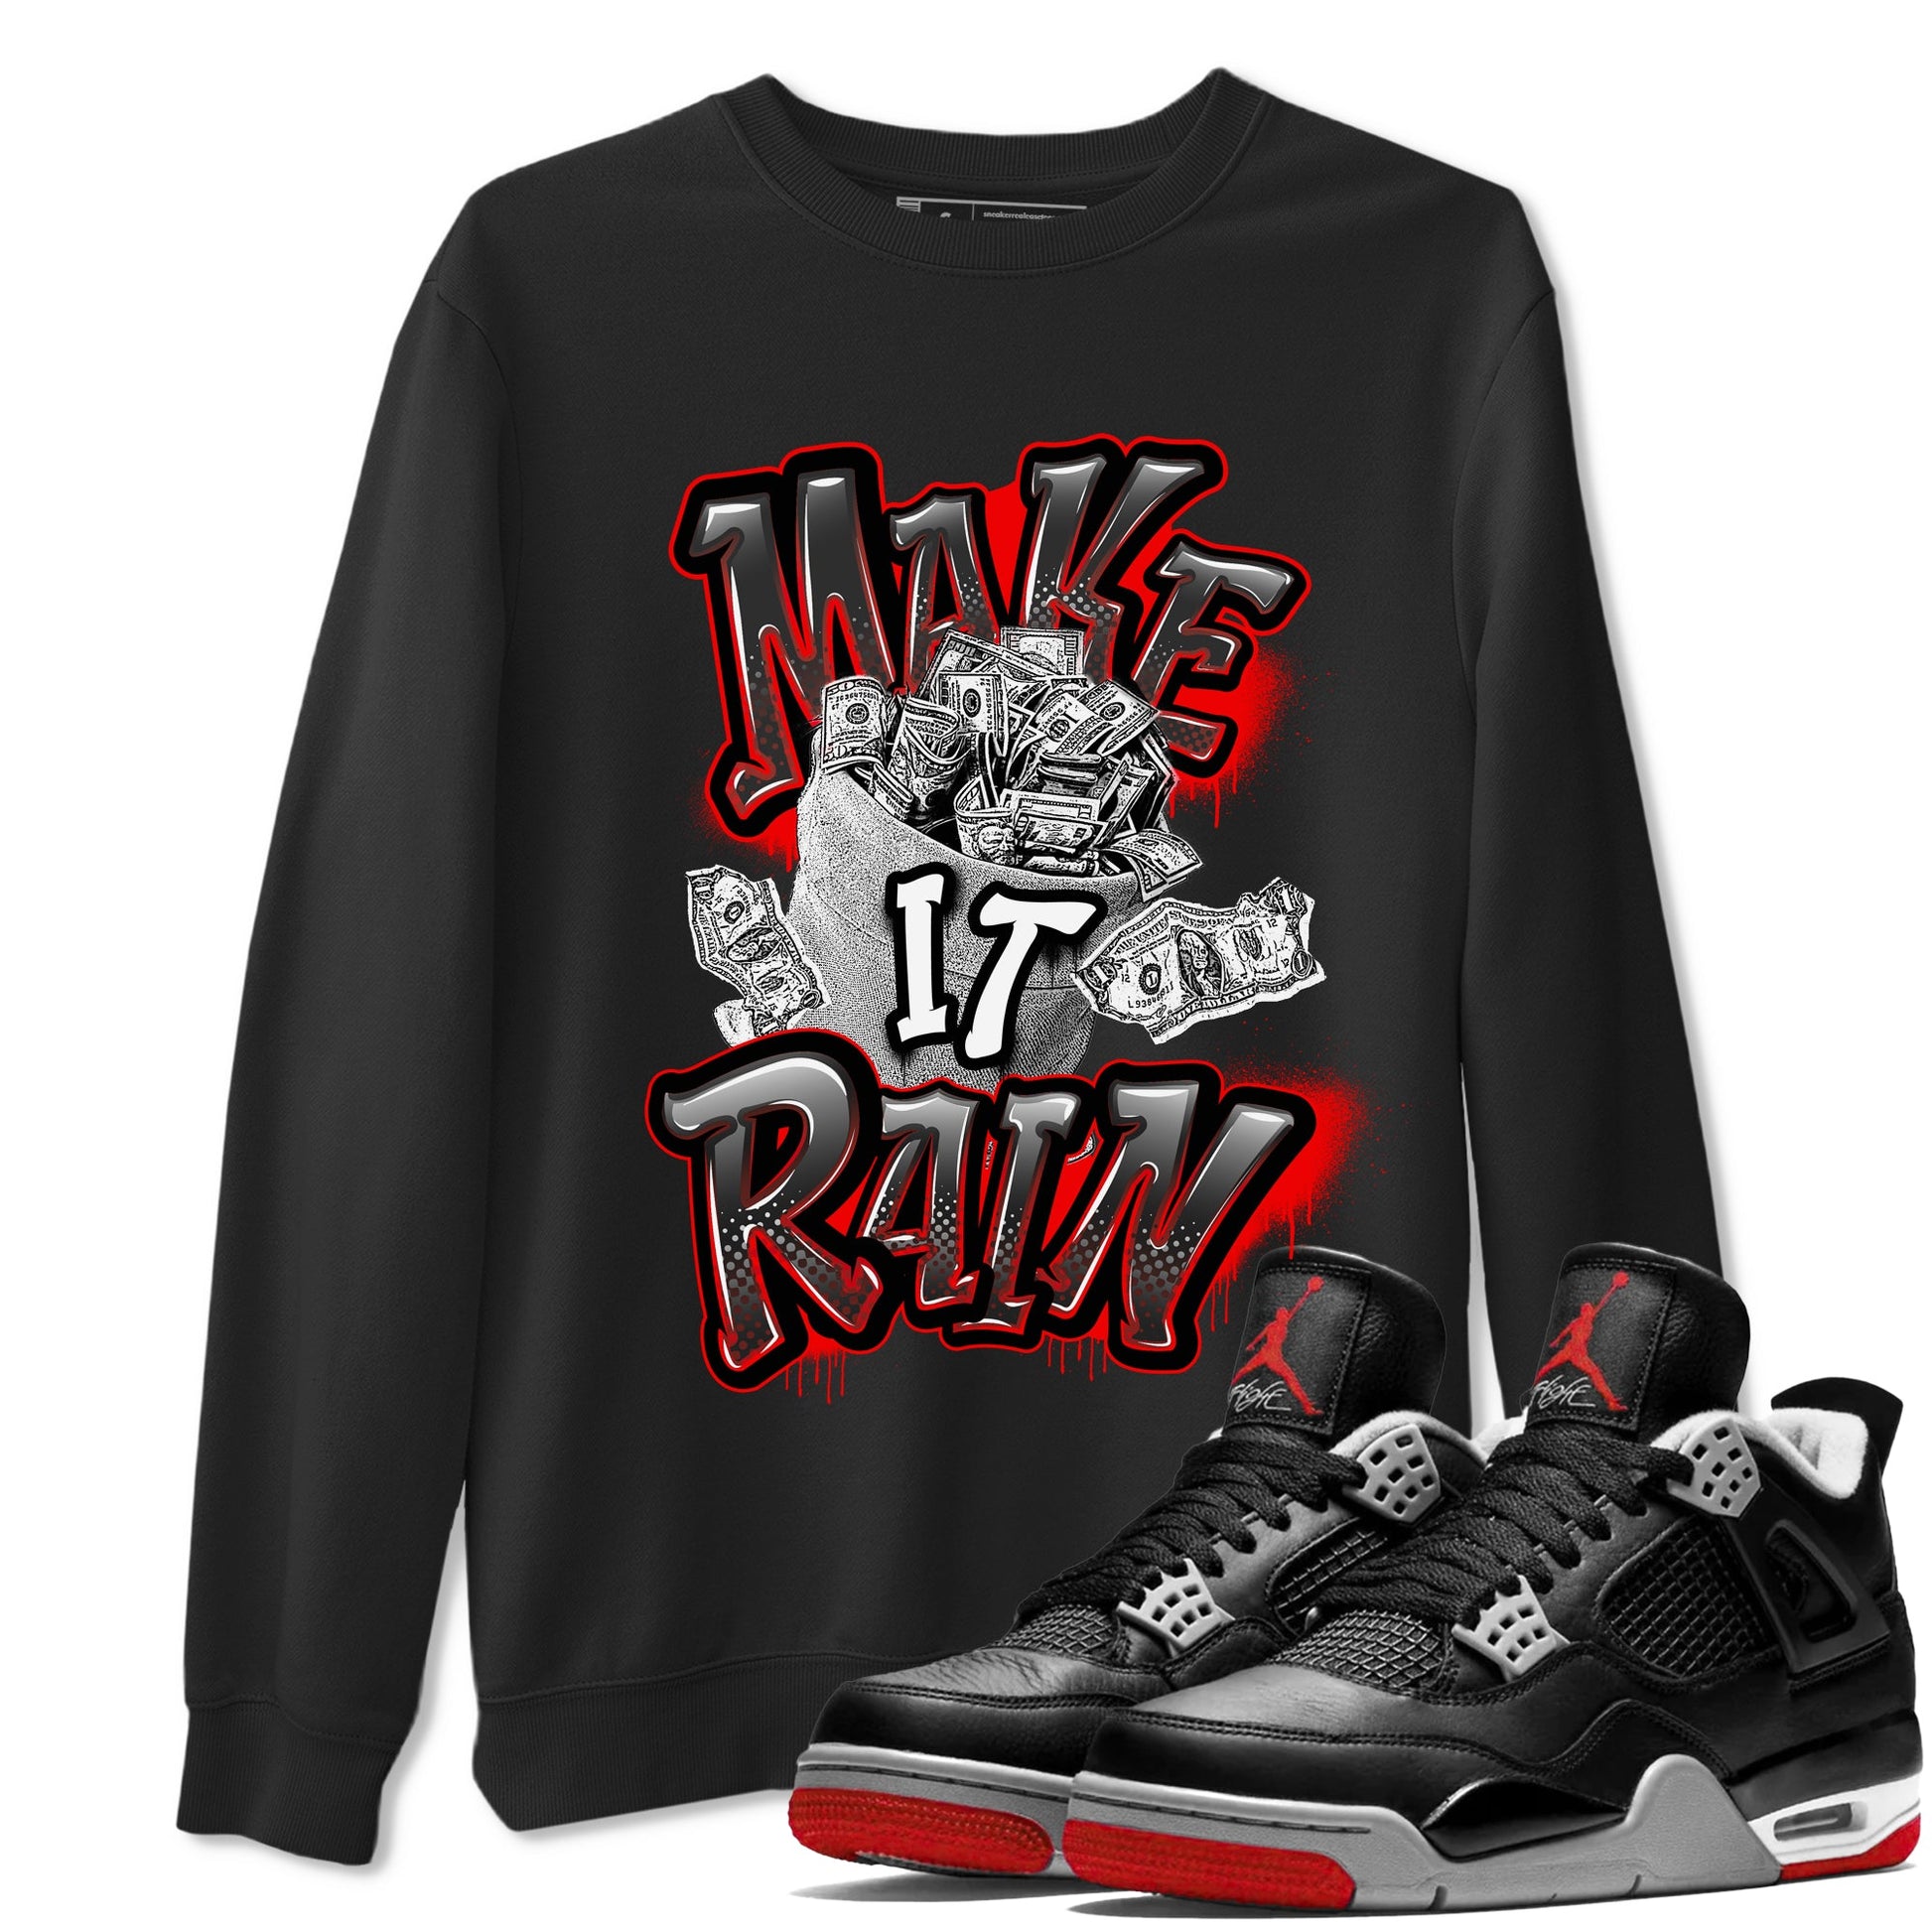 Air Jordan 4 Bred Reimagined shirt to match jordans Make It Rain Money sneaker tees AJ4 Bred Reimagined SNRT Sneaker Release Tees unisex cotton Black 1 crew neck shirt